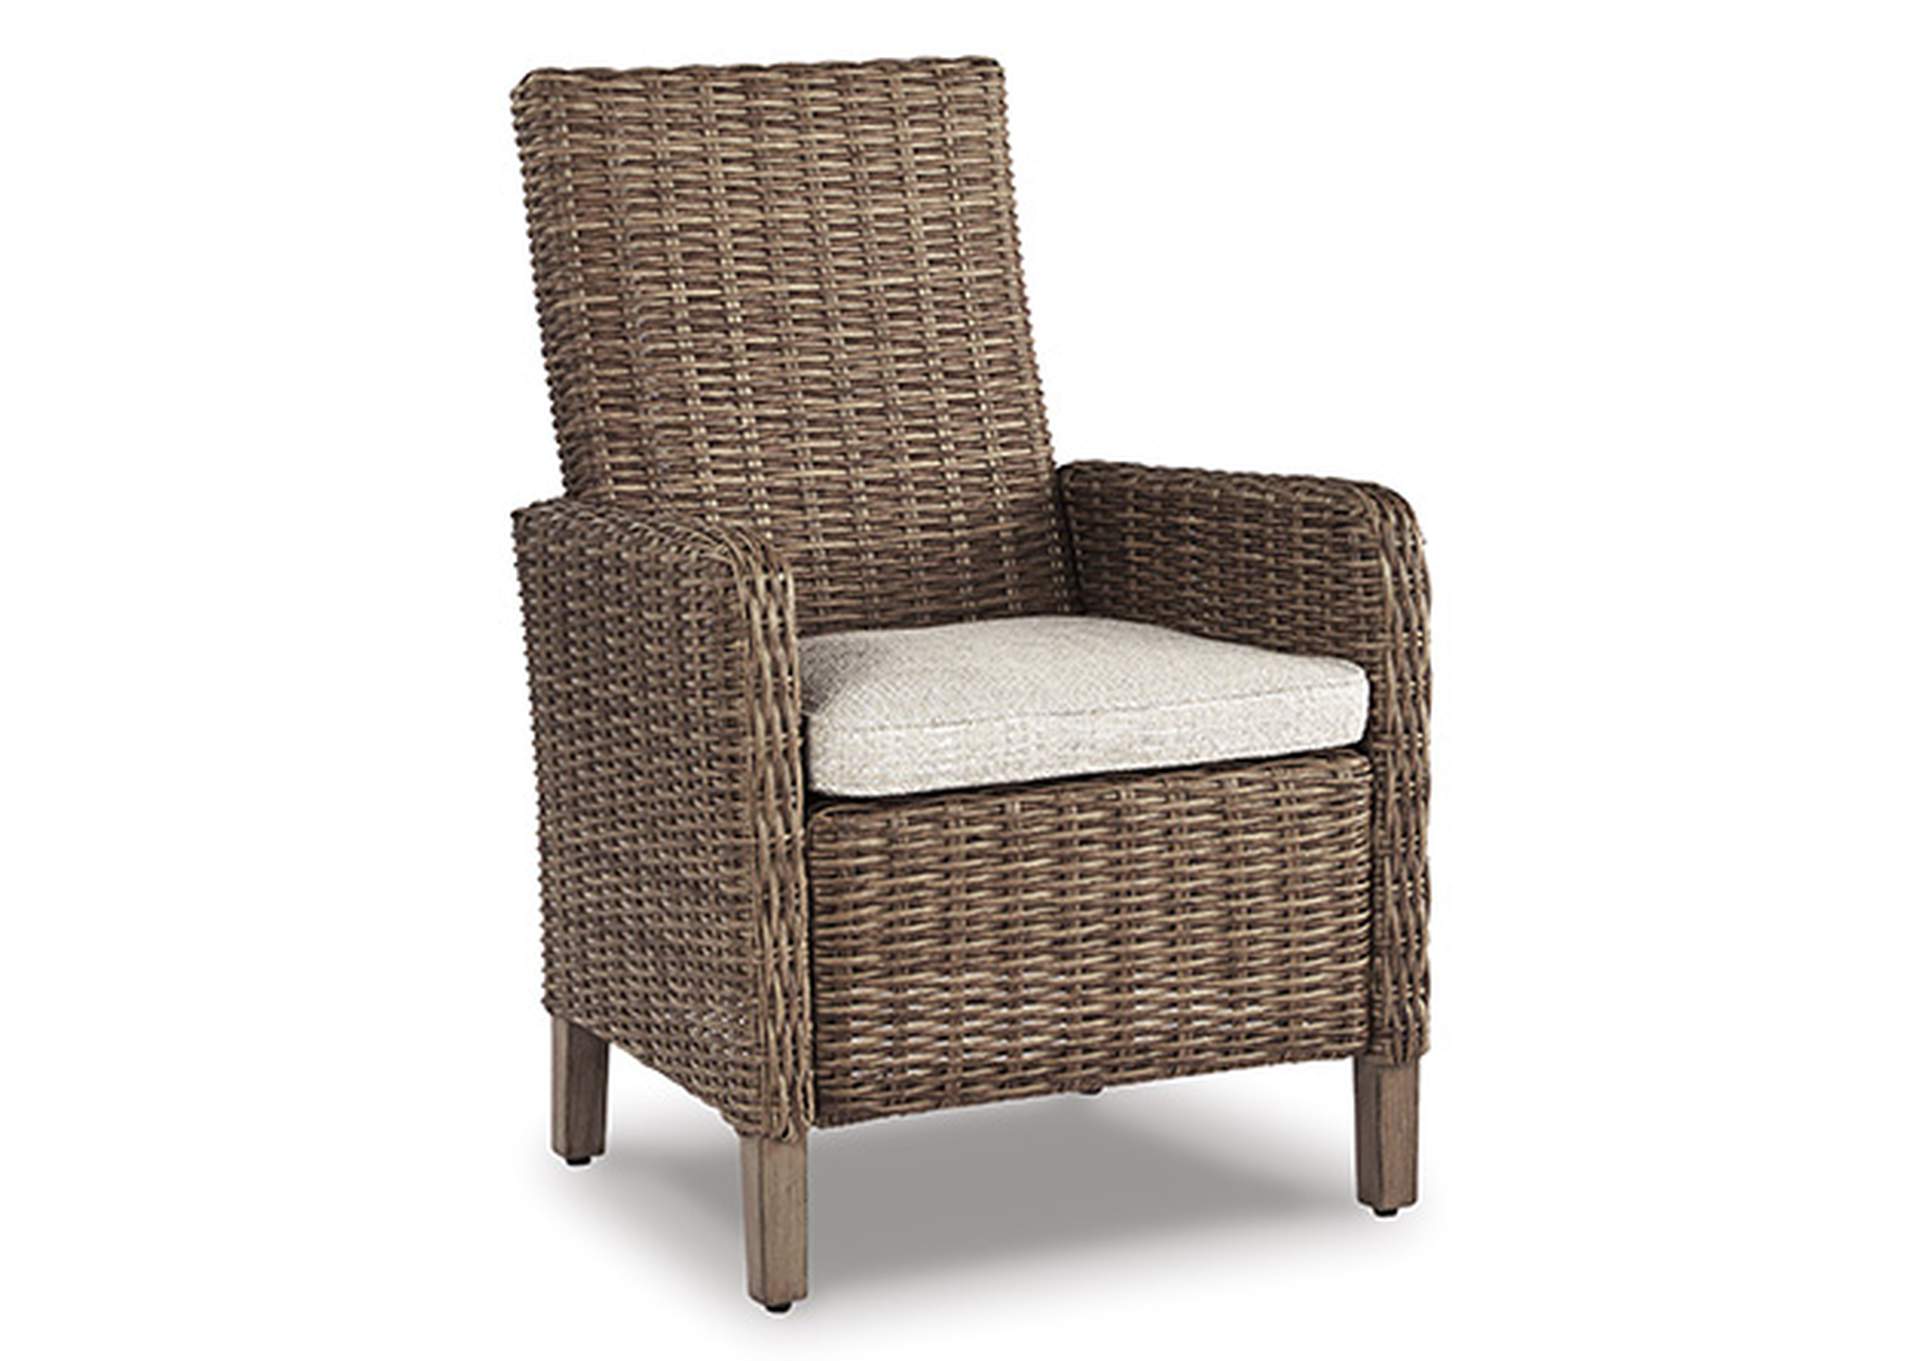 Beachcroft Arm Chair with Cushion (Set of 2)